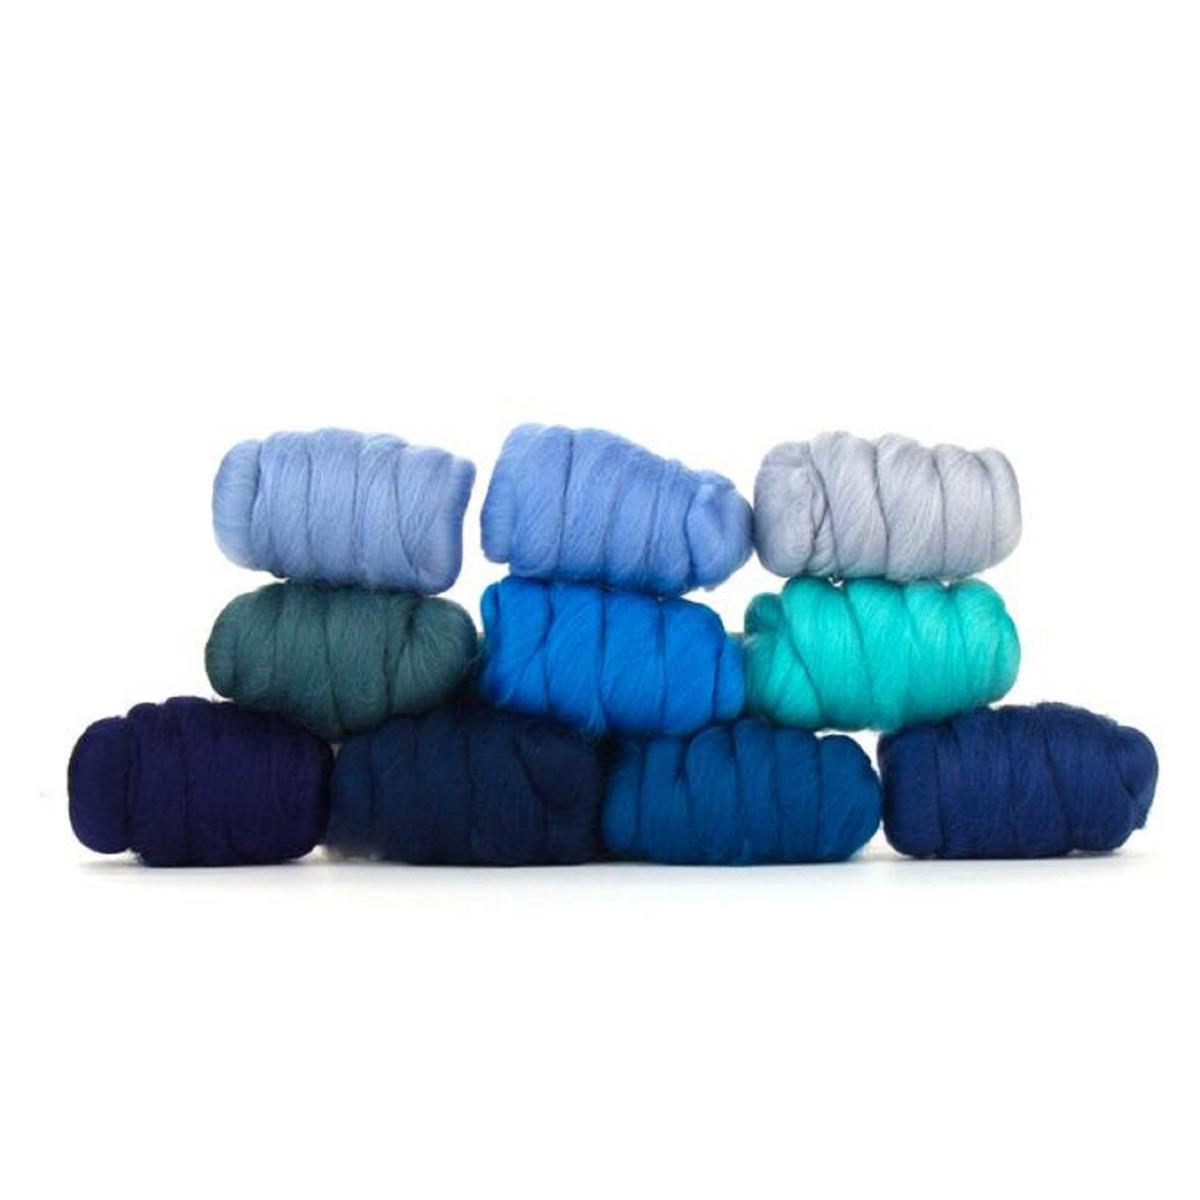 Mixed Merino Wool Variety Pack | Wooly Waves (Blues) 250 Grams, 23 Micron - Textile Indie 